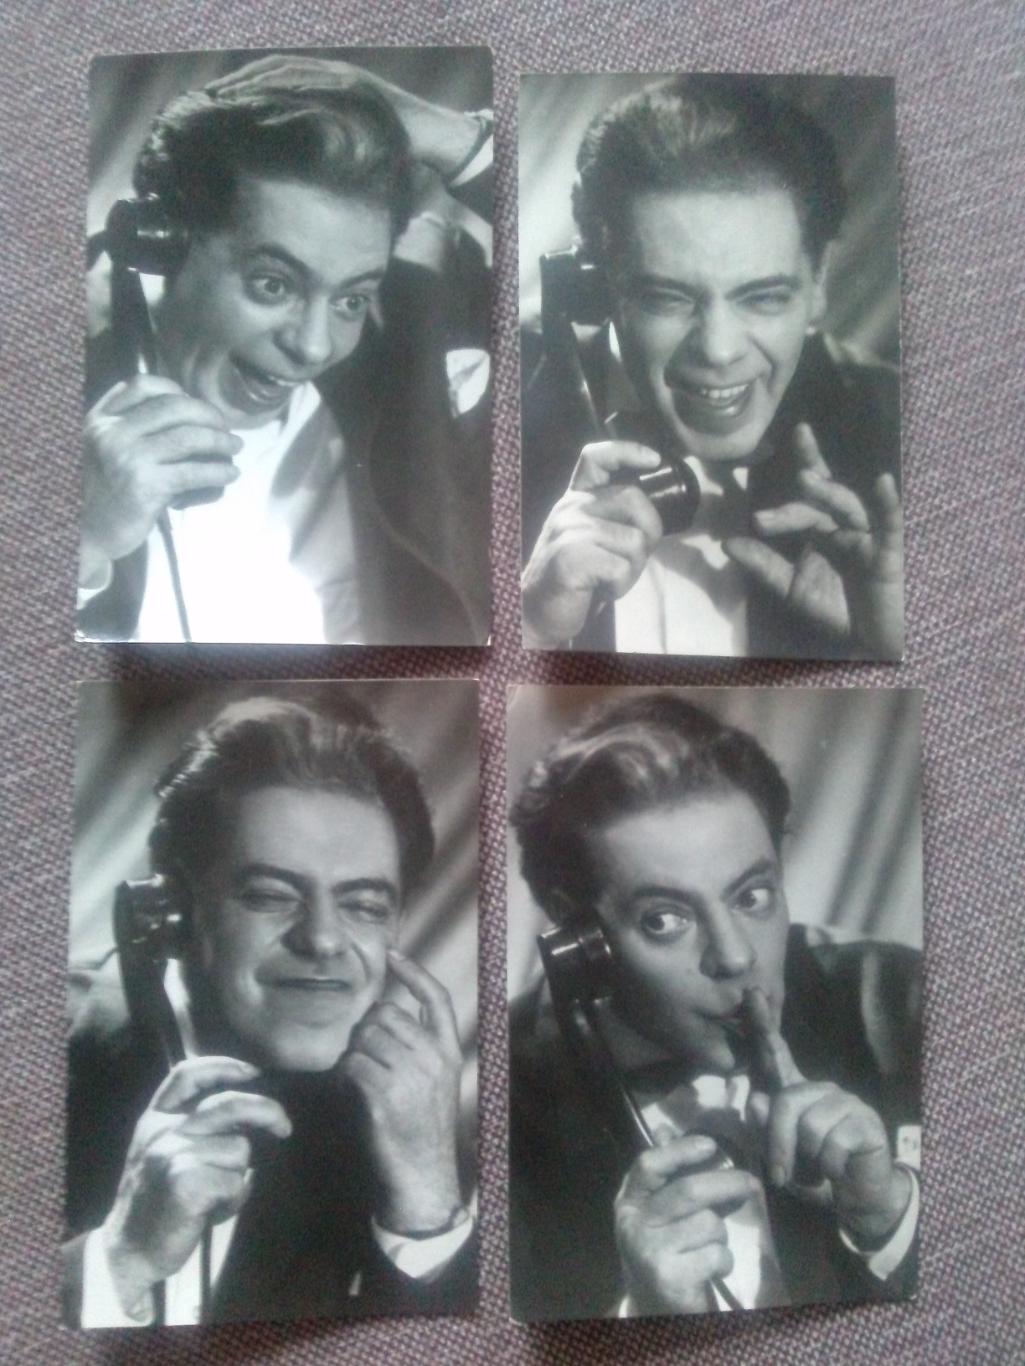 Народный артист РСФСР : Аркадий Райкин 1964 г. полный набор - 16 фотооткрыток 2